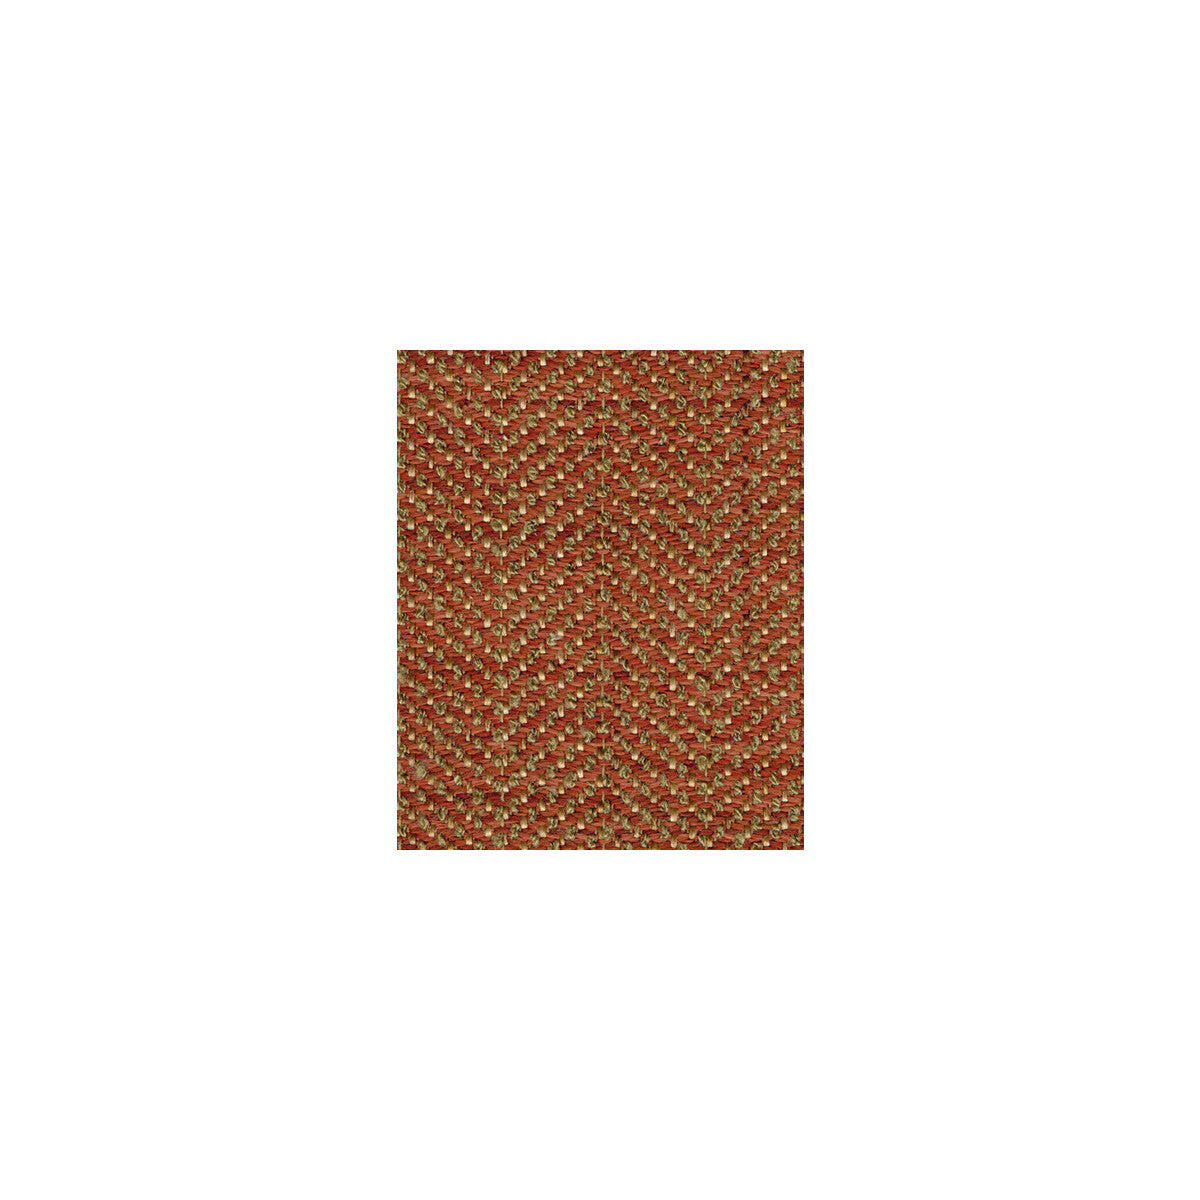 Kravet Smart fabric in 30666-312 color - pattern 30666.312.0 - by Kravet Smart